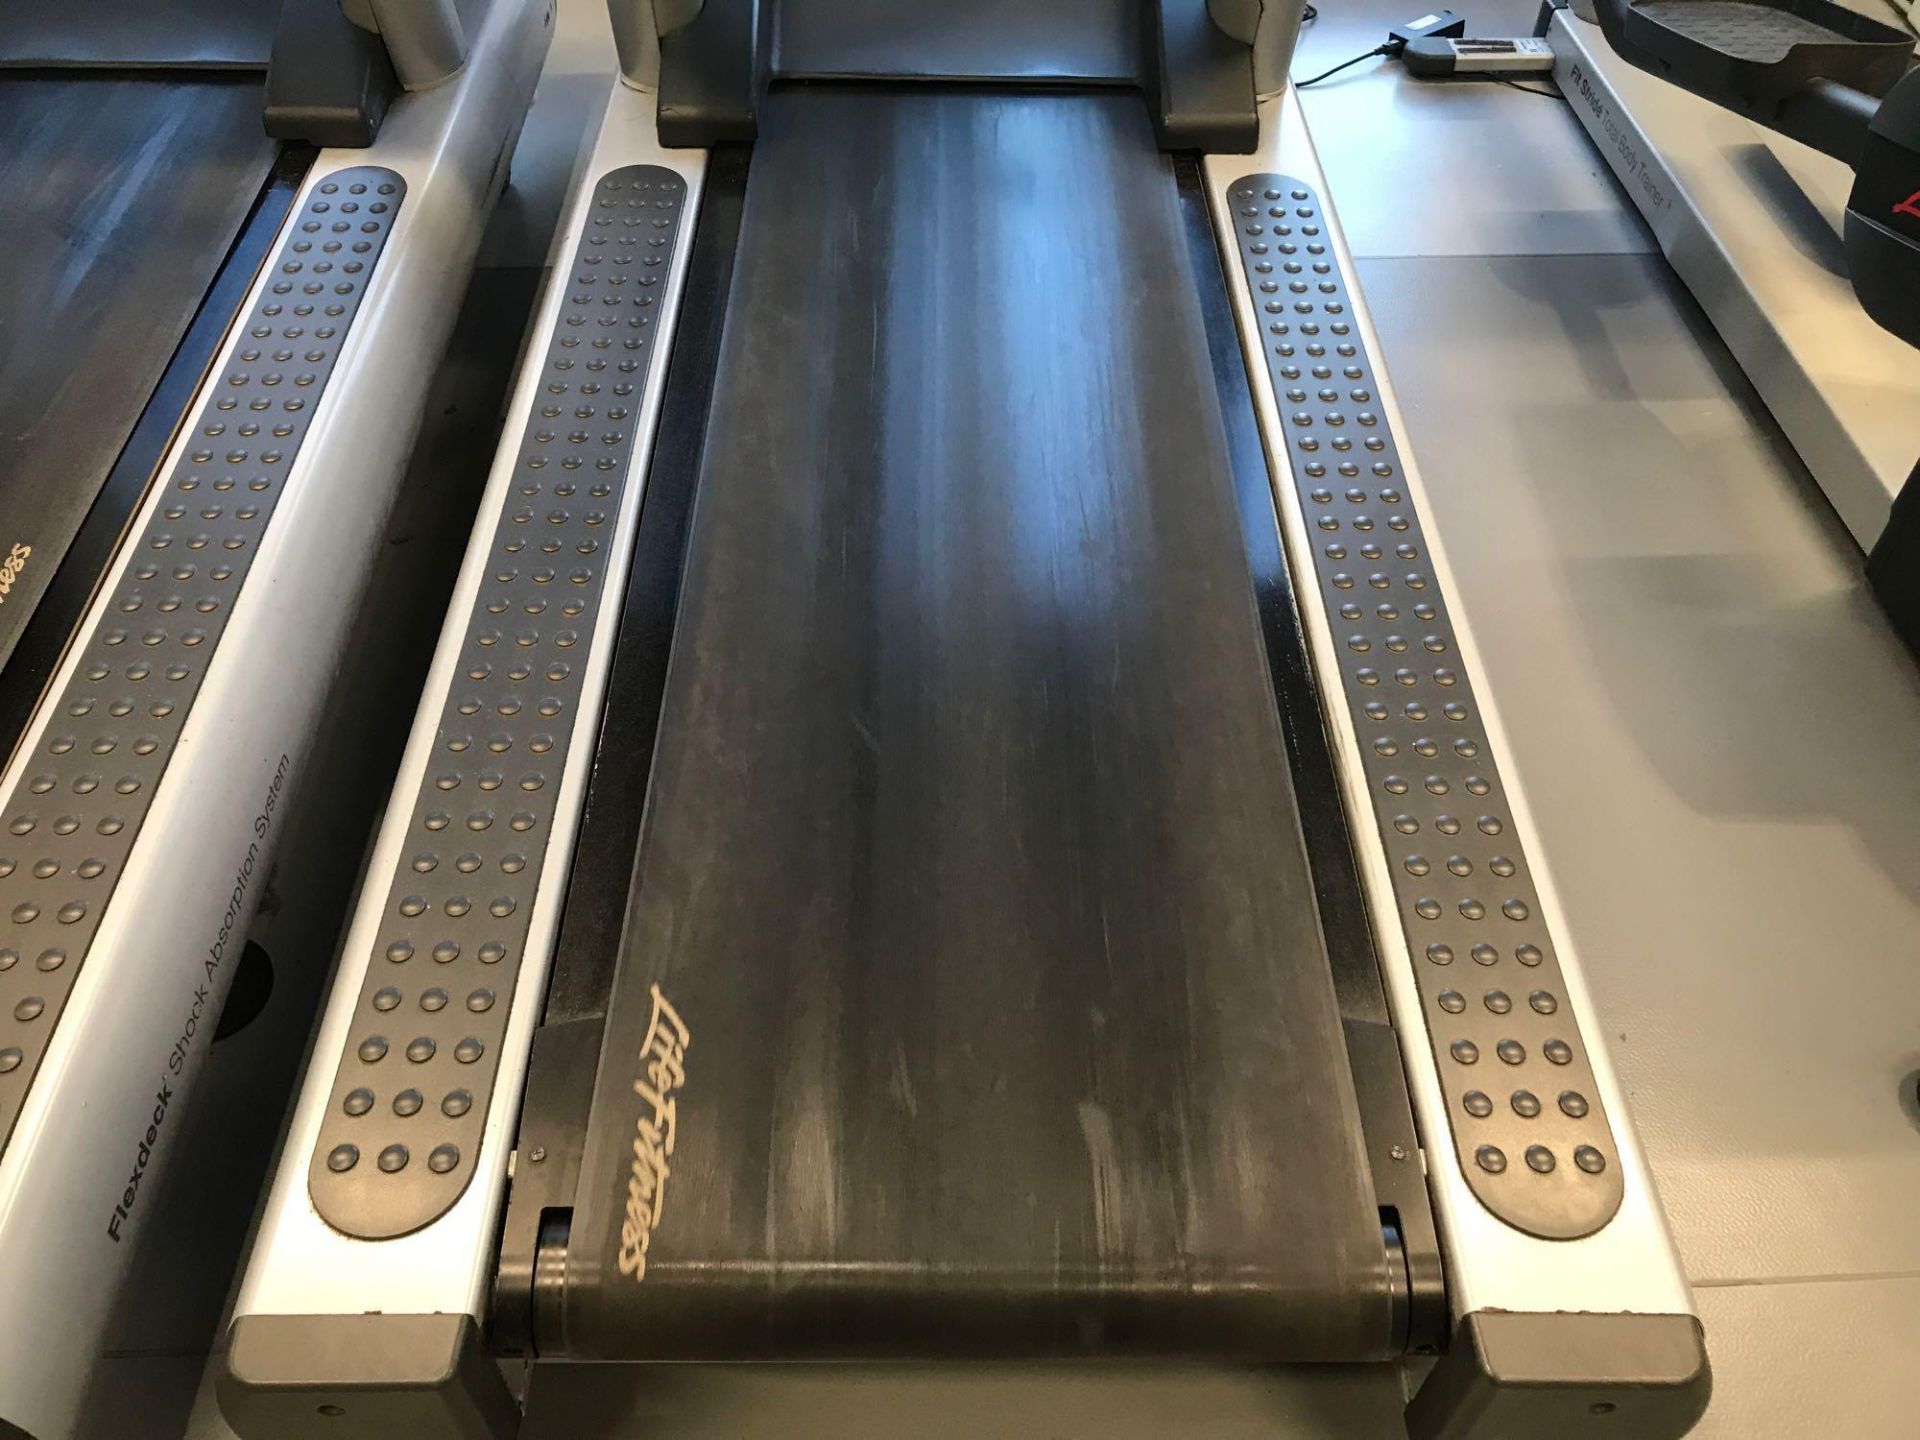 x1 Life fitness flex deck treadmill - Image 2 of 4